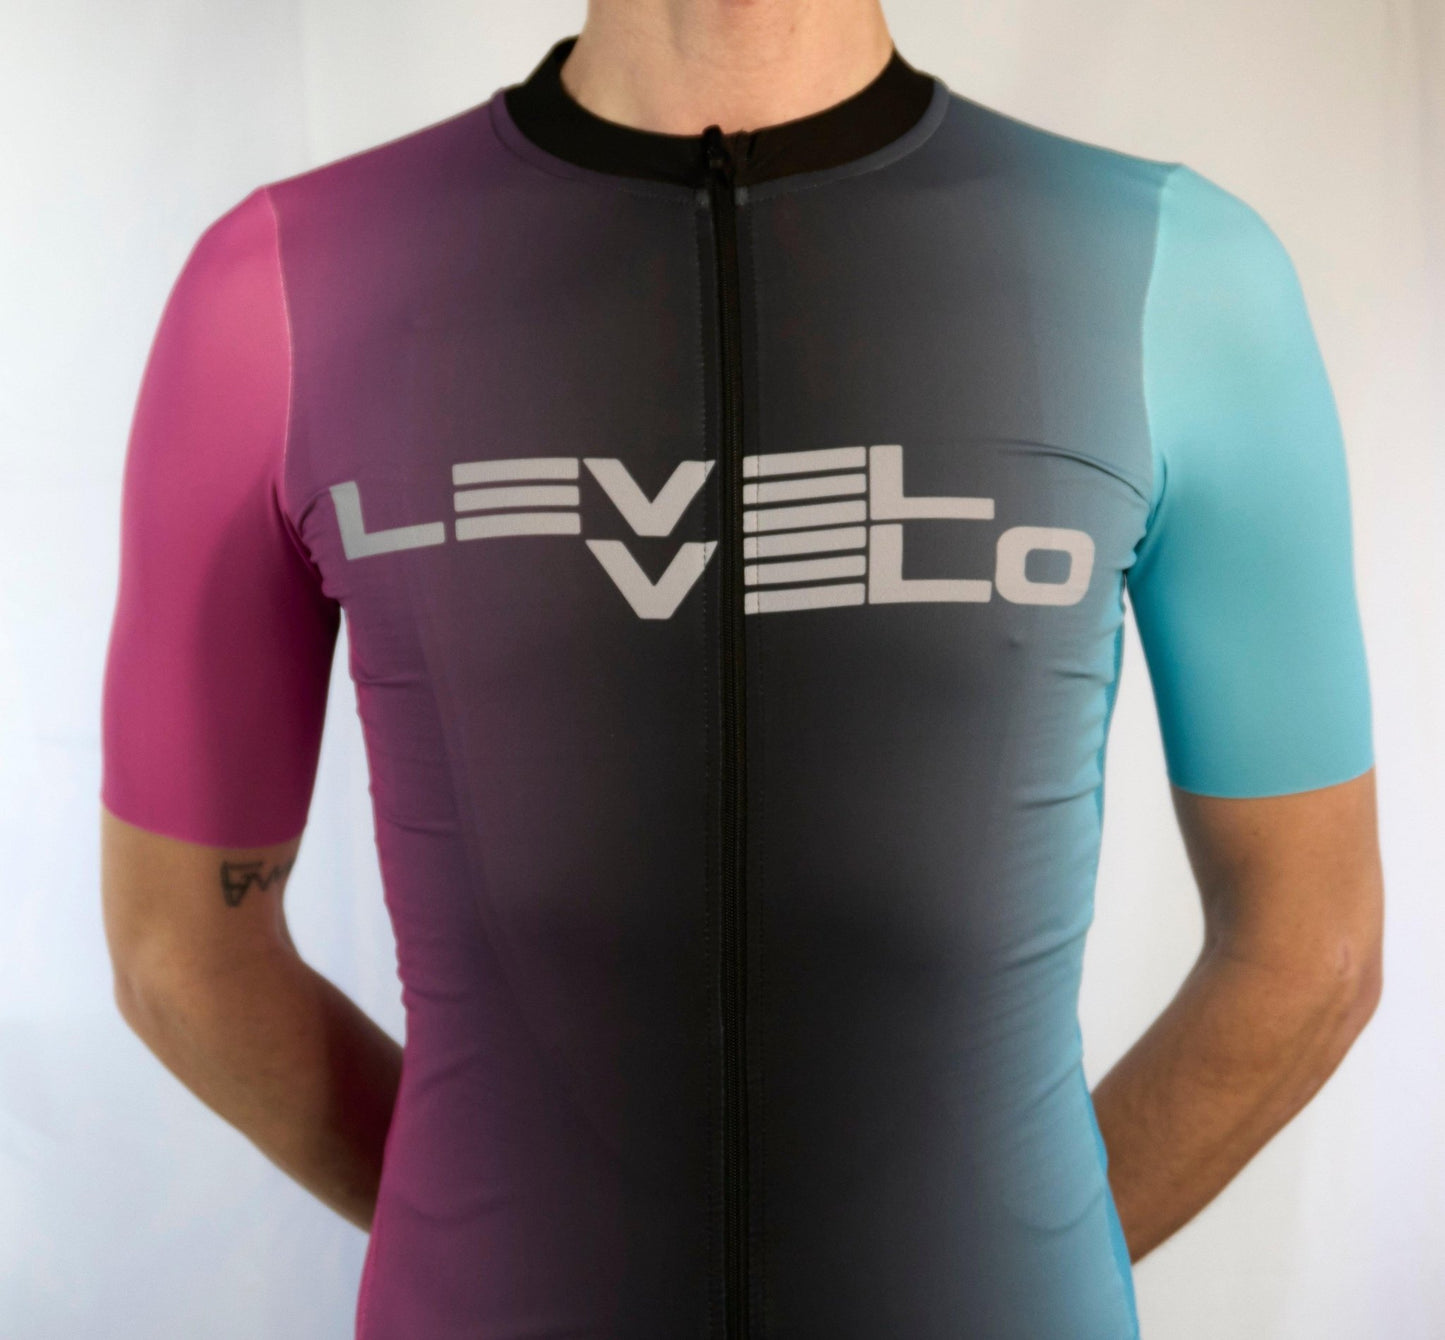 BL13 Men's Pro Race Aero Cycling Jersey - LEVEL VELO